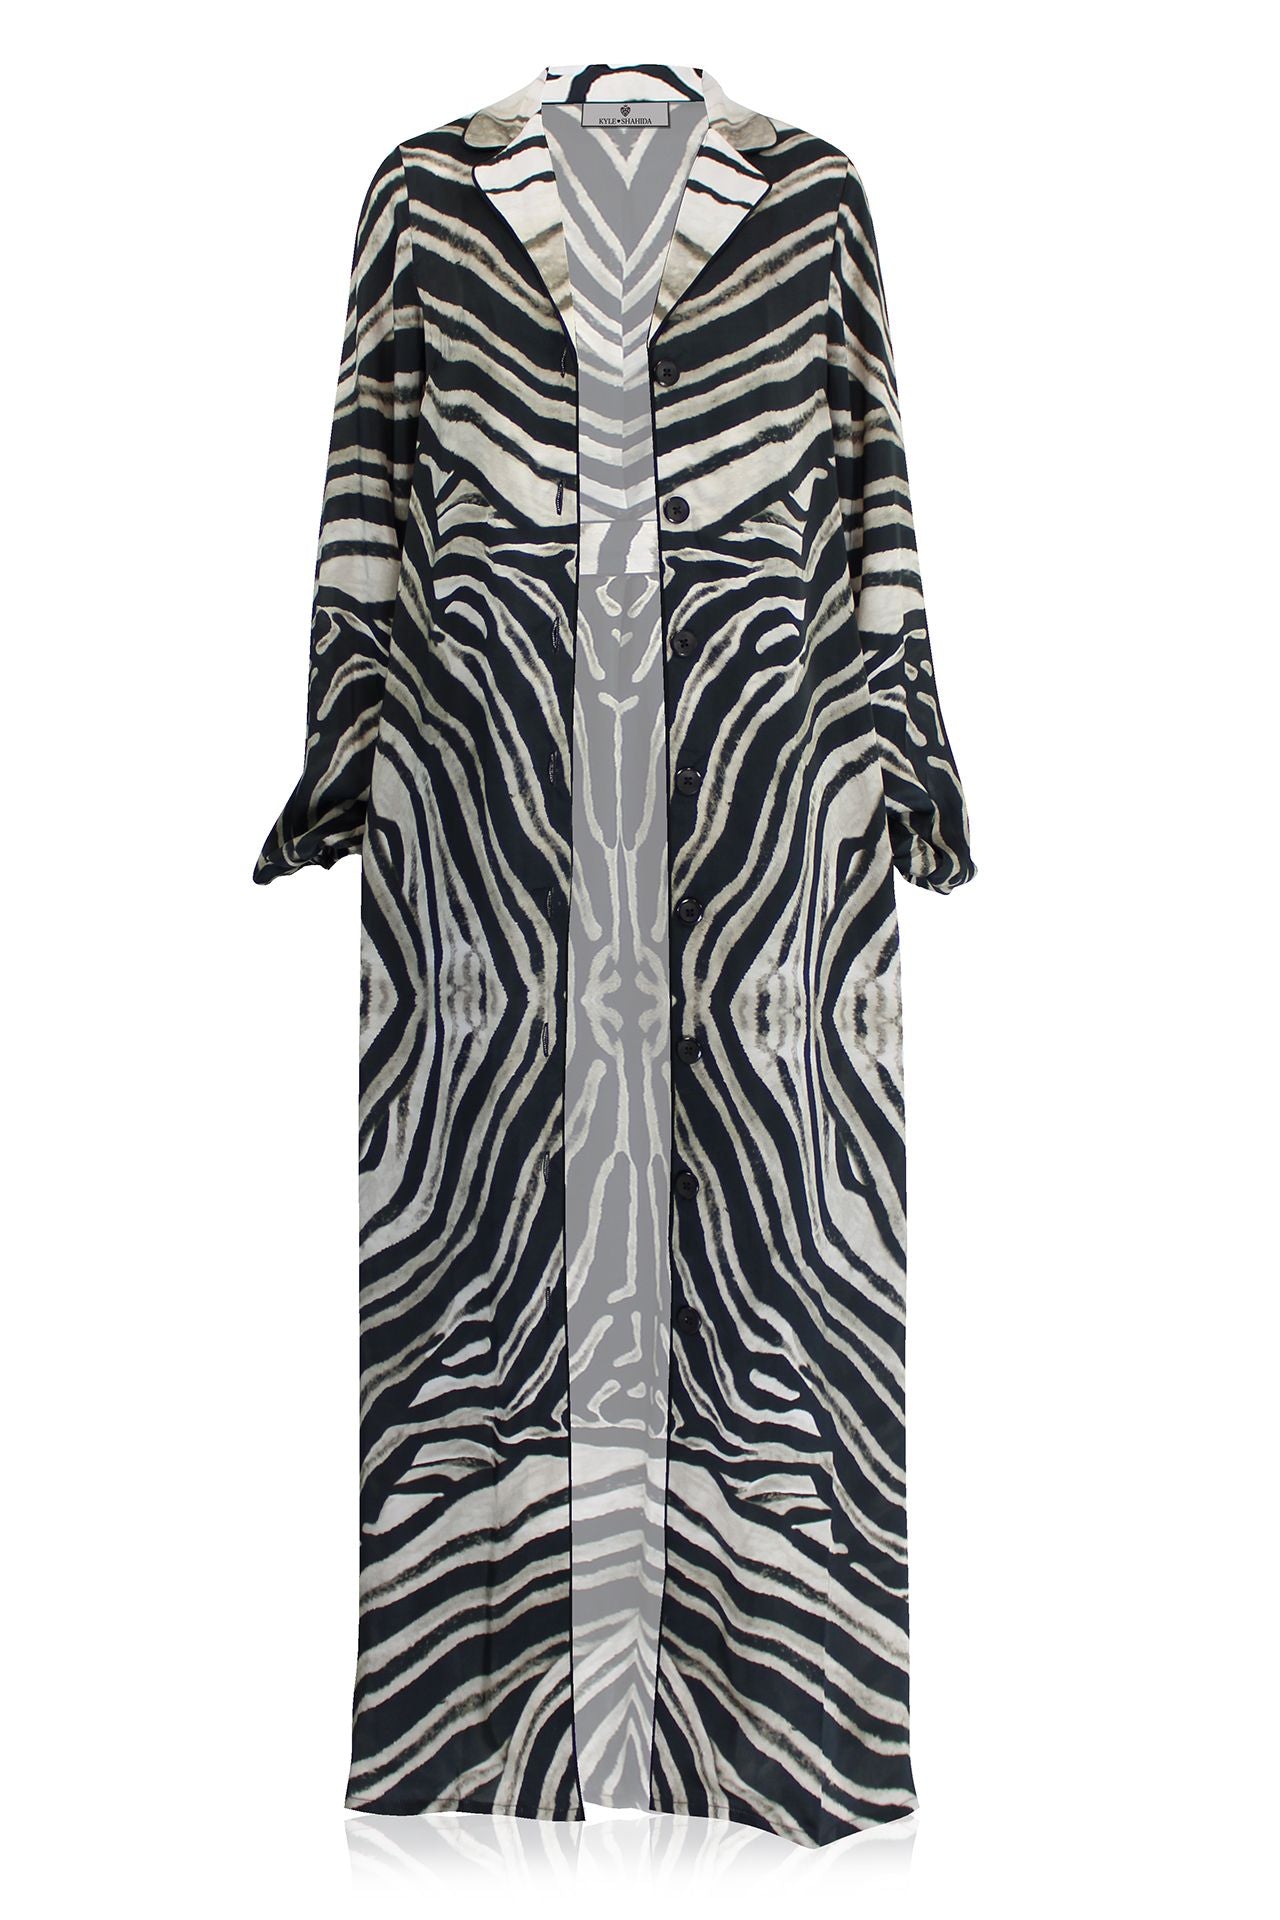 "long dress coat for ladies" "Kyle X Shahida" "womens full length down coat" "long zebra coat"